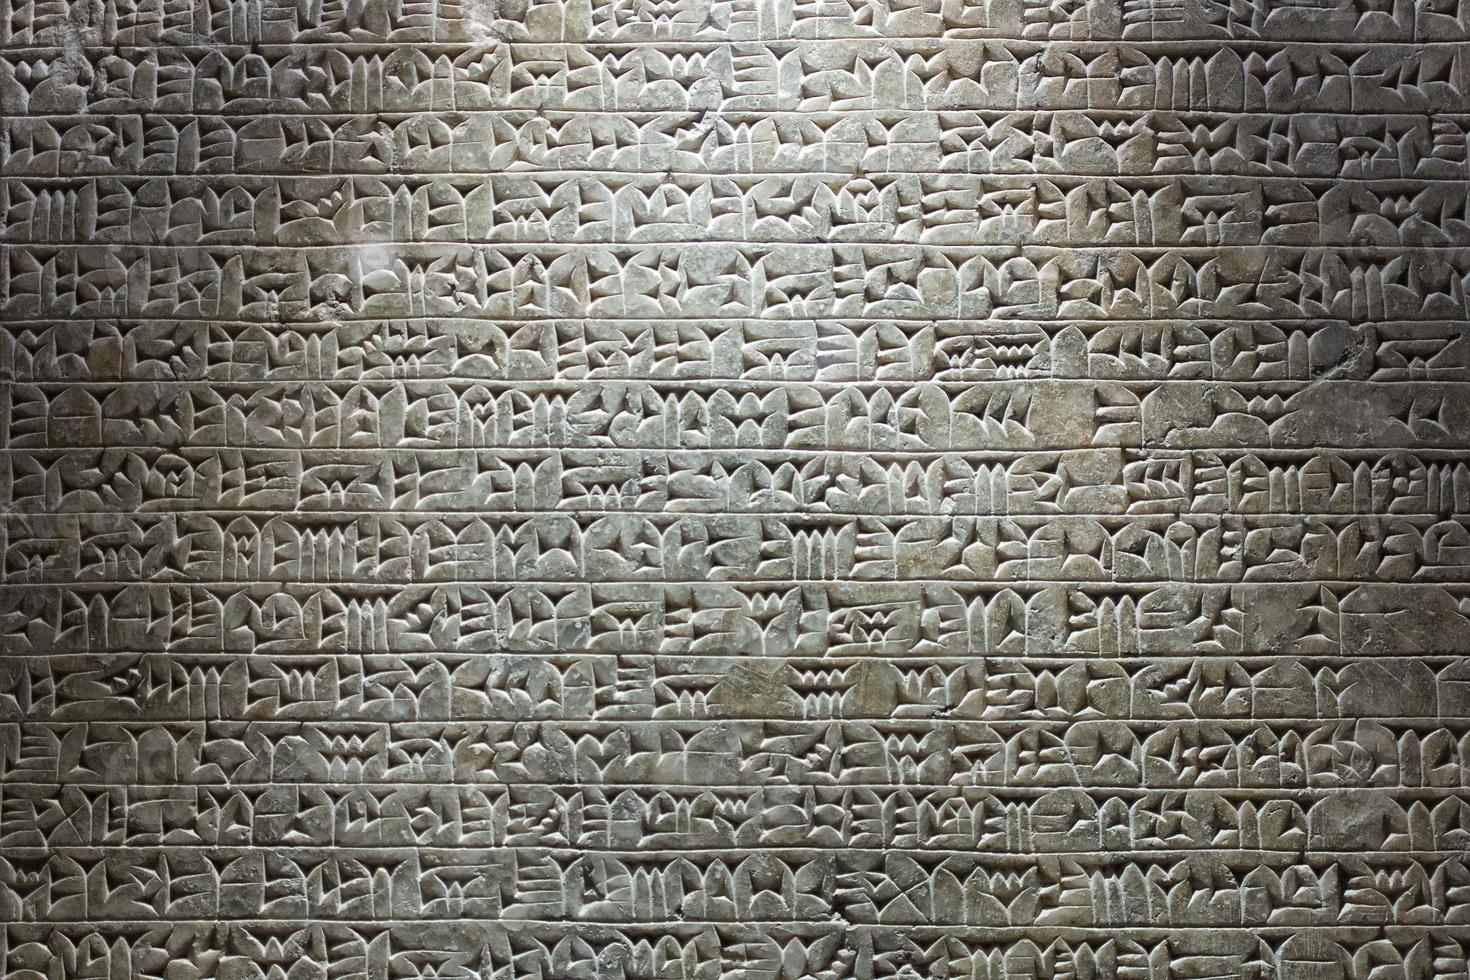 babylonisk assyrisk inskriptioner foto